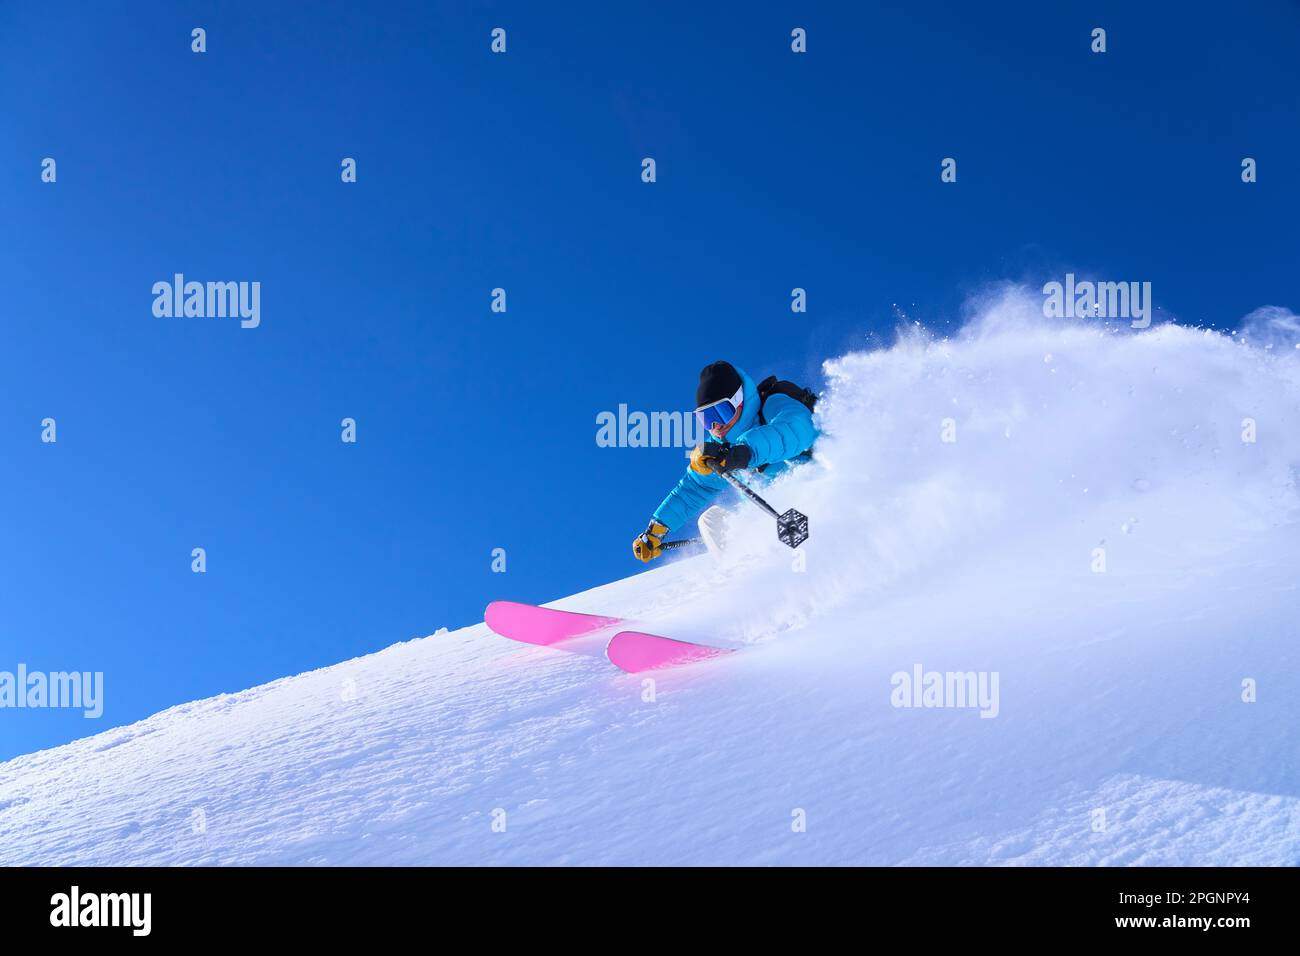 Man skiing downhill on snow under blue sky Stock Photo